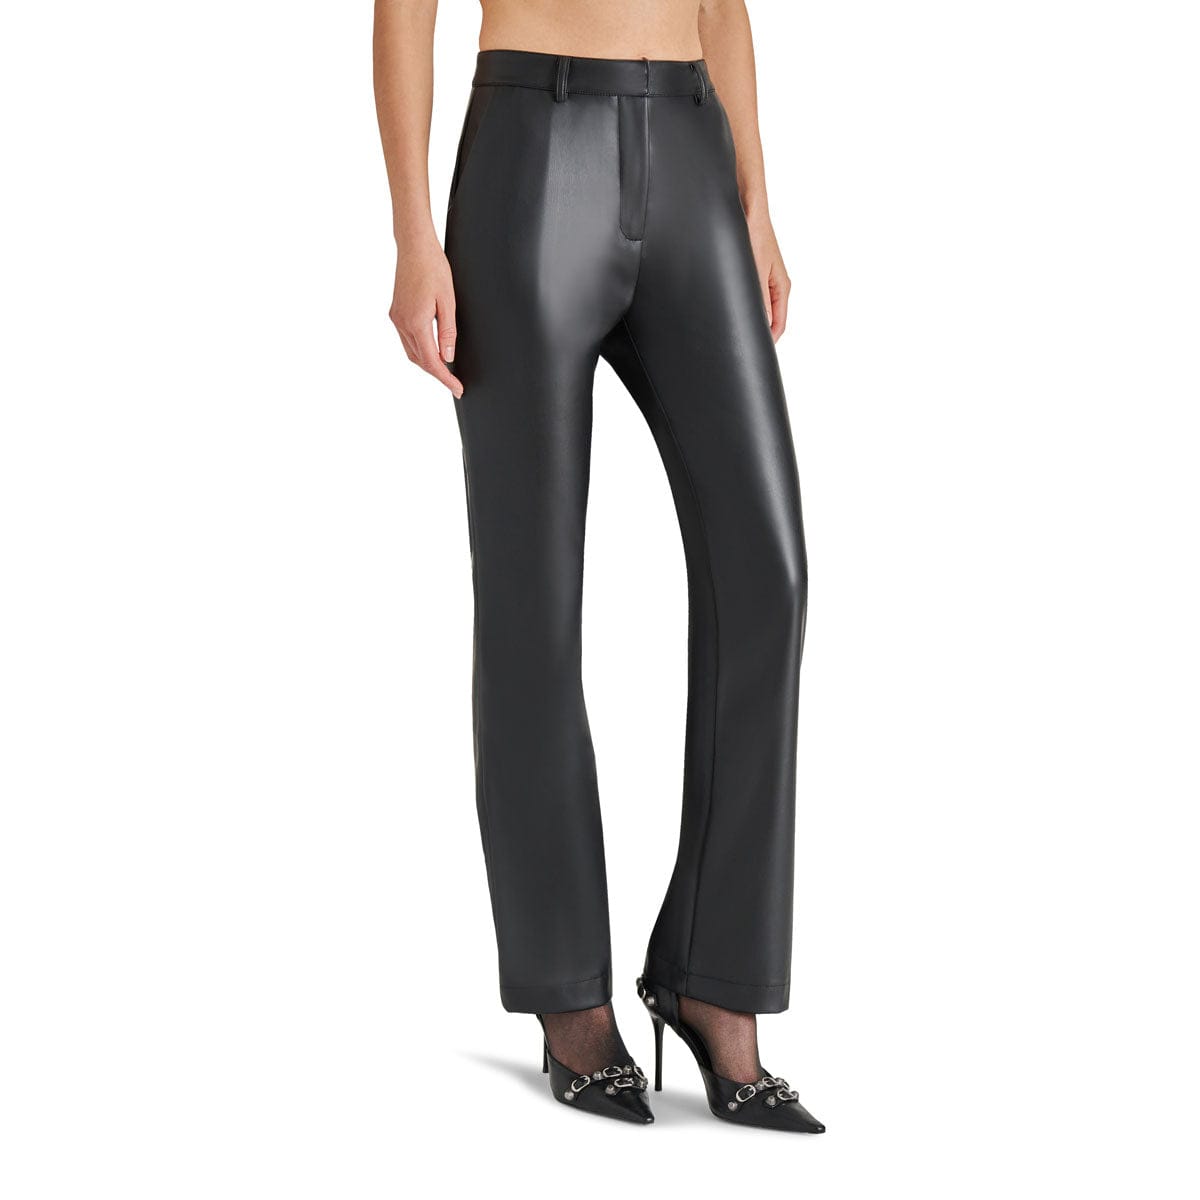 Steve Madden Mercer Faux Leather Pant black front | MILK MONEY milkmoney.co | cute pants for women. cute trendy pants.